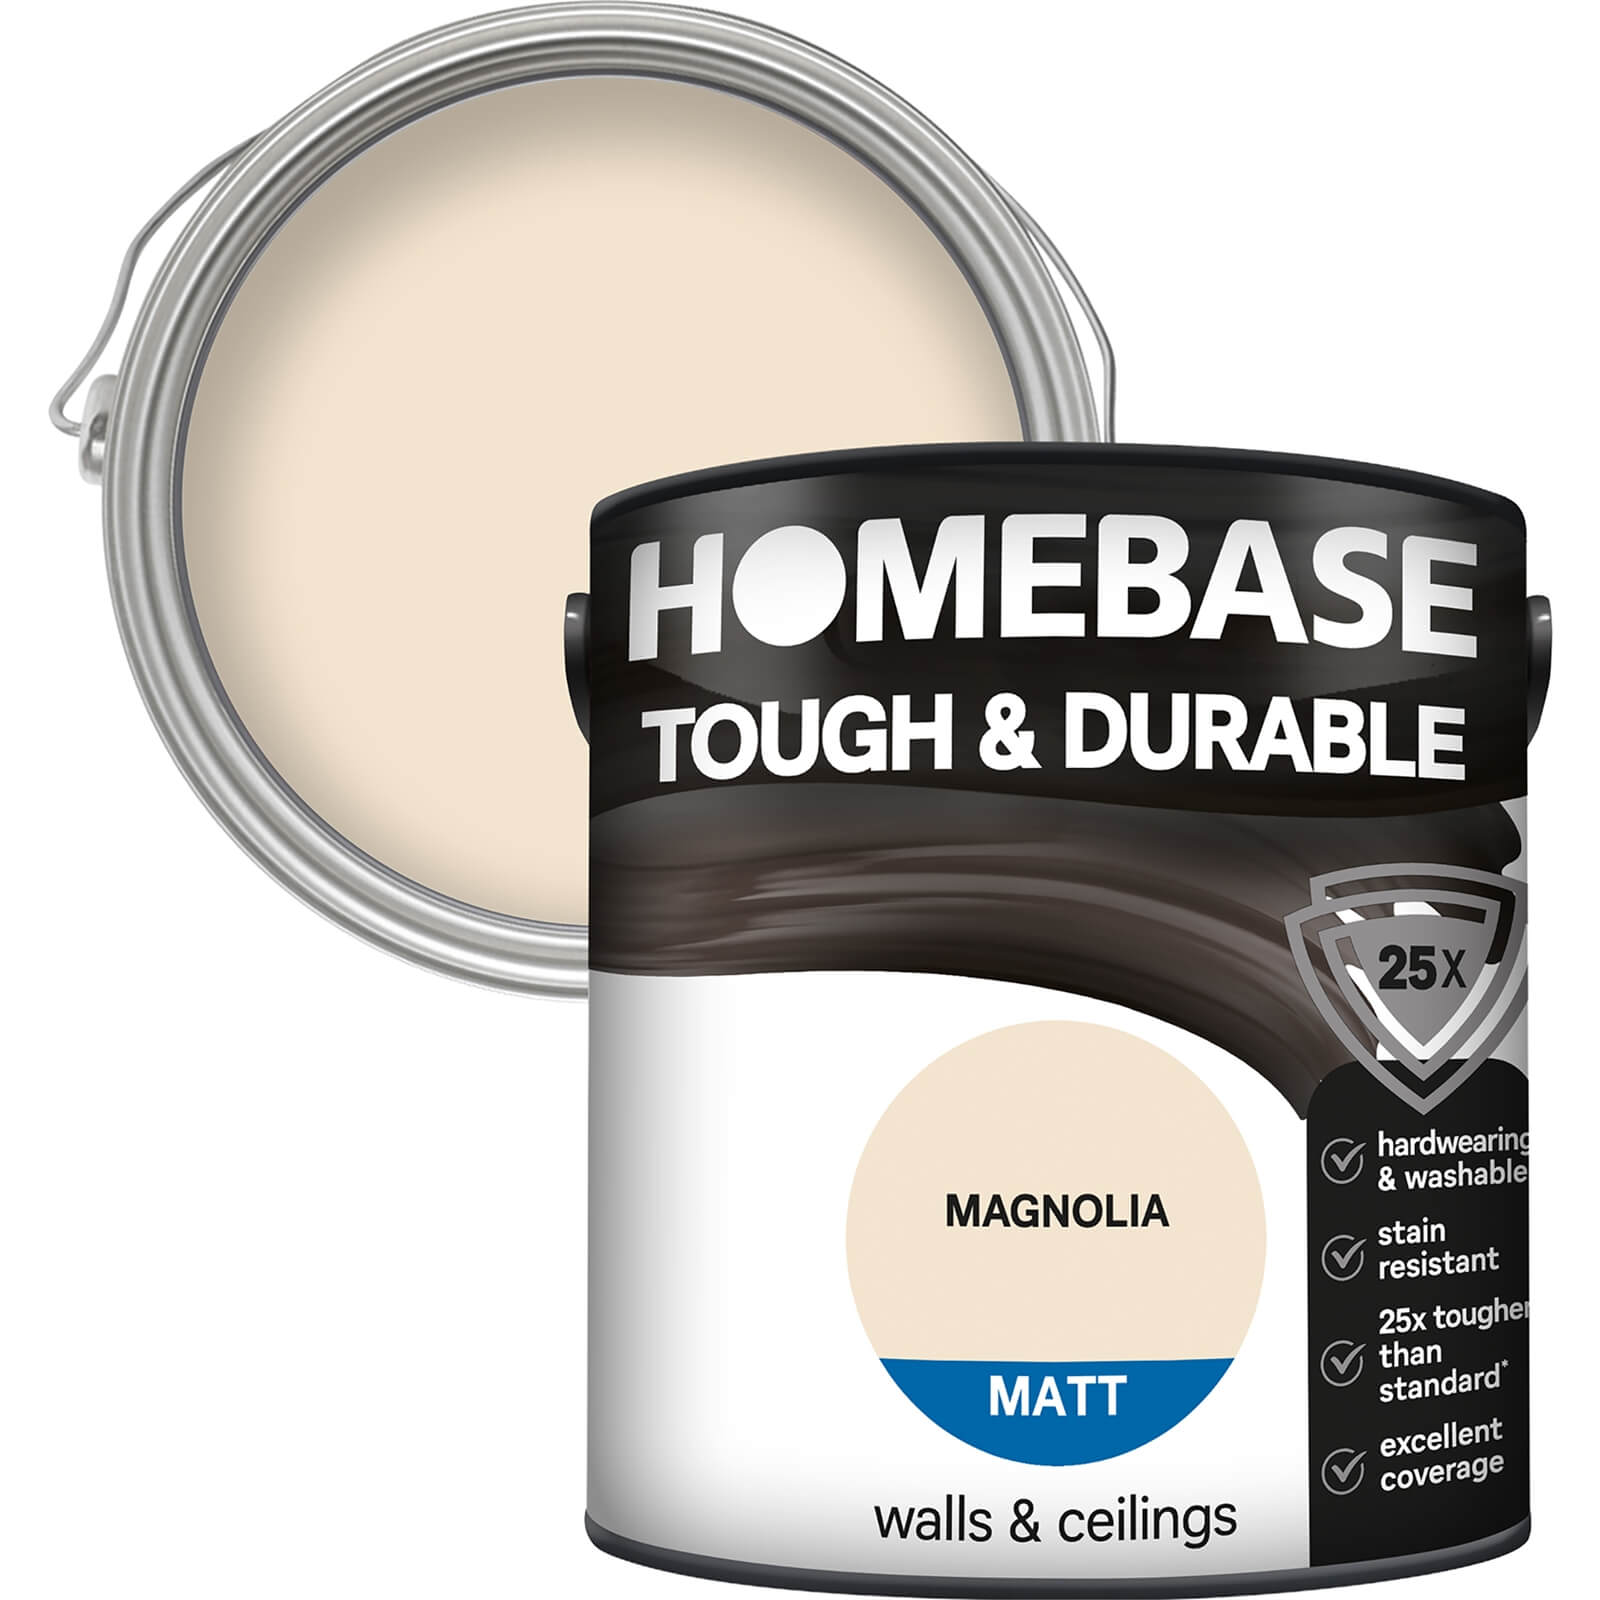 Homebase Tough & Durable Matt Paint Magnolia - 2.5L